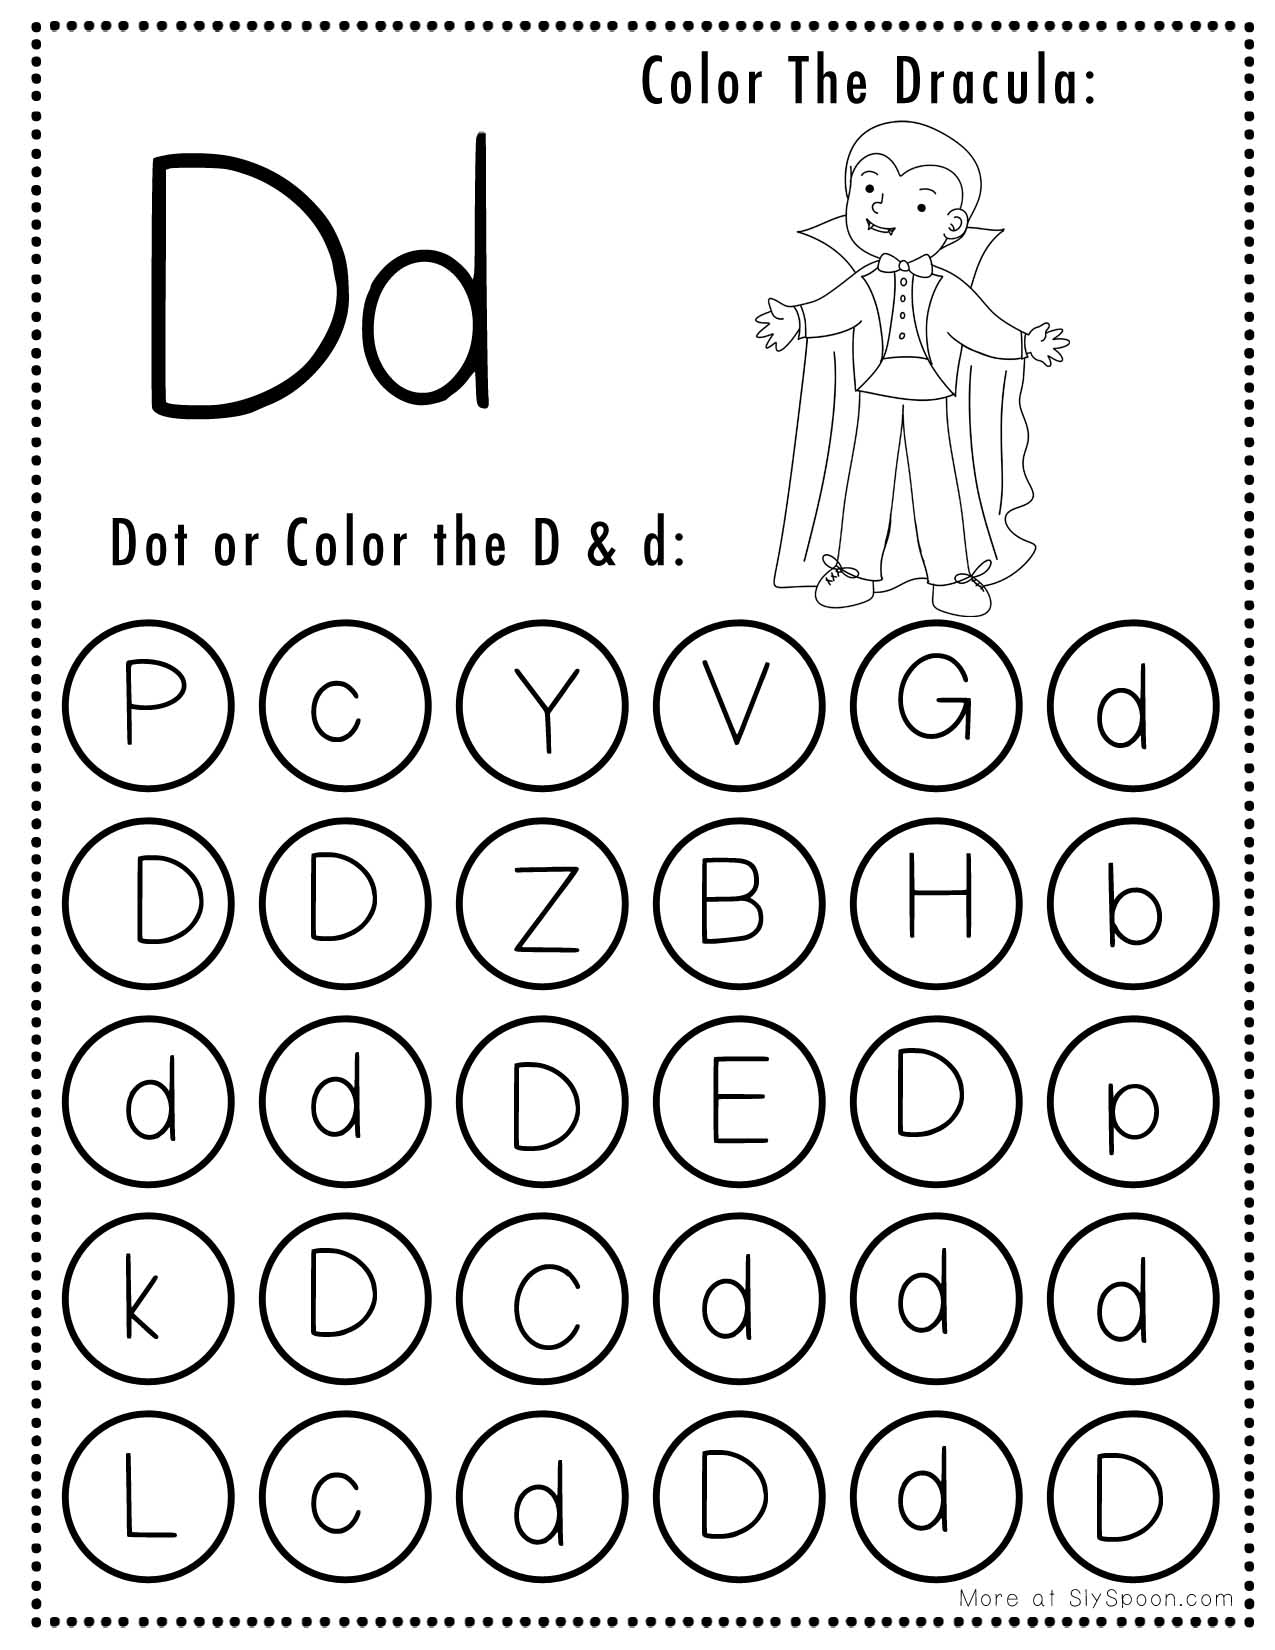 Free Printable Halloween Themed Letter D Dot Marker Activity Worksheets ...